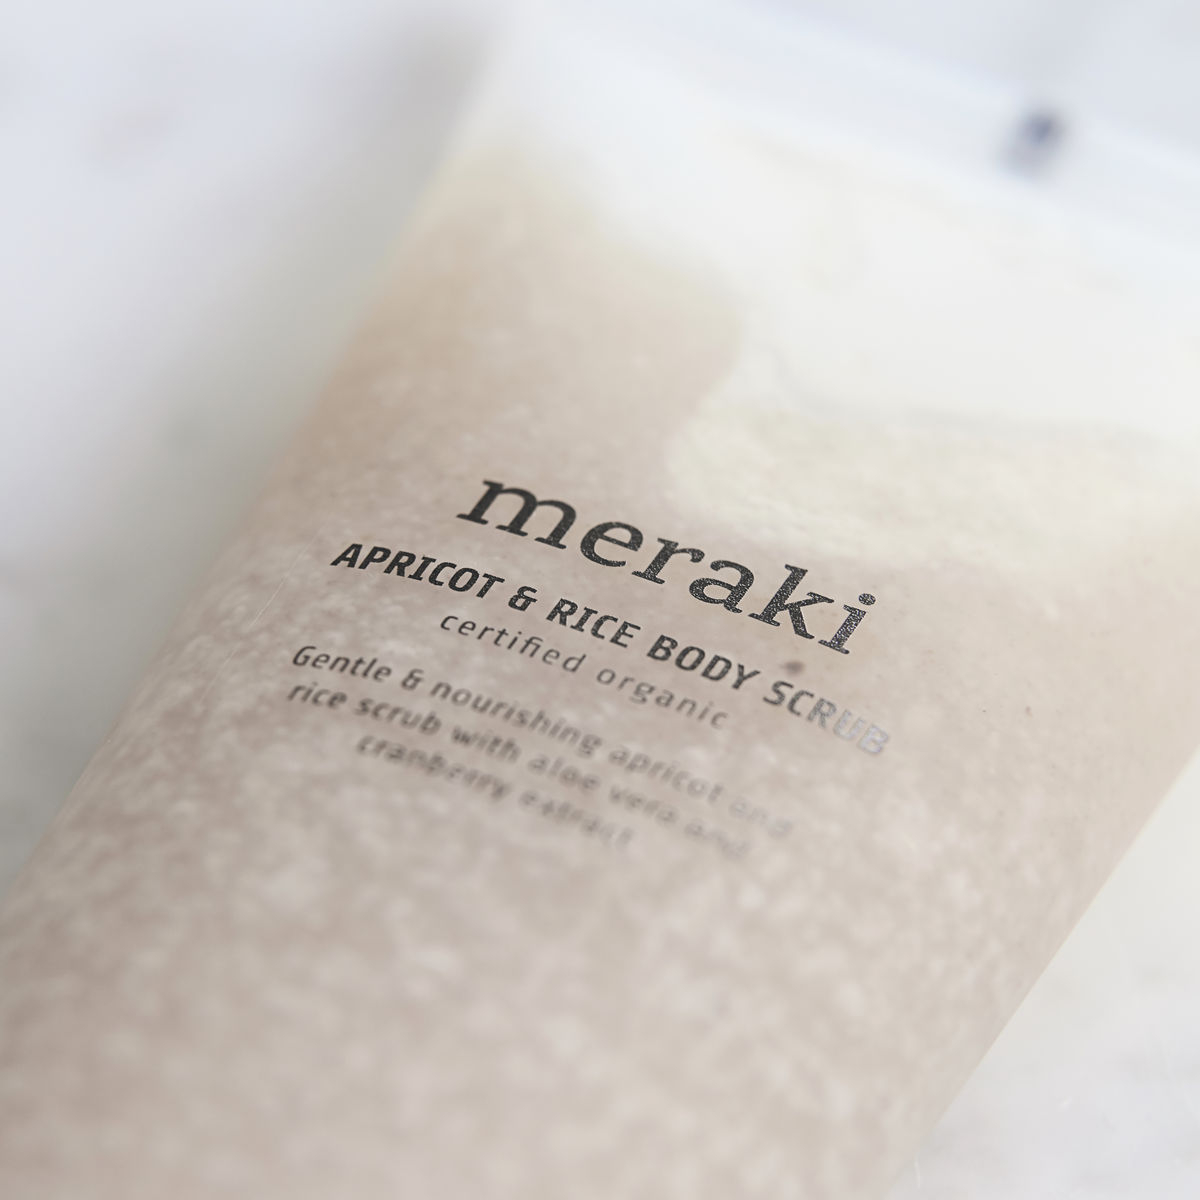 Meraki, Apricot and rice body scrub